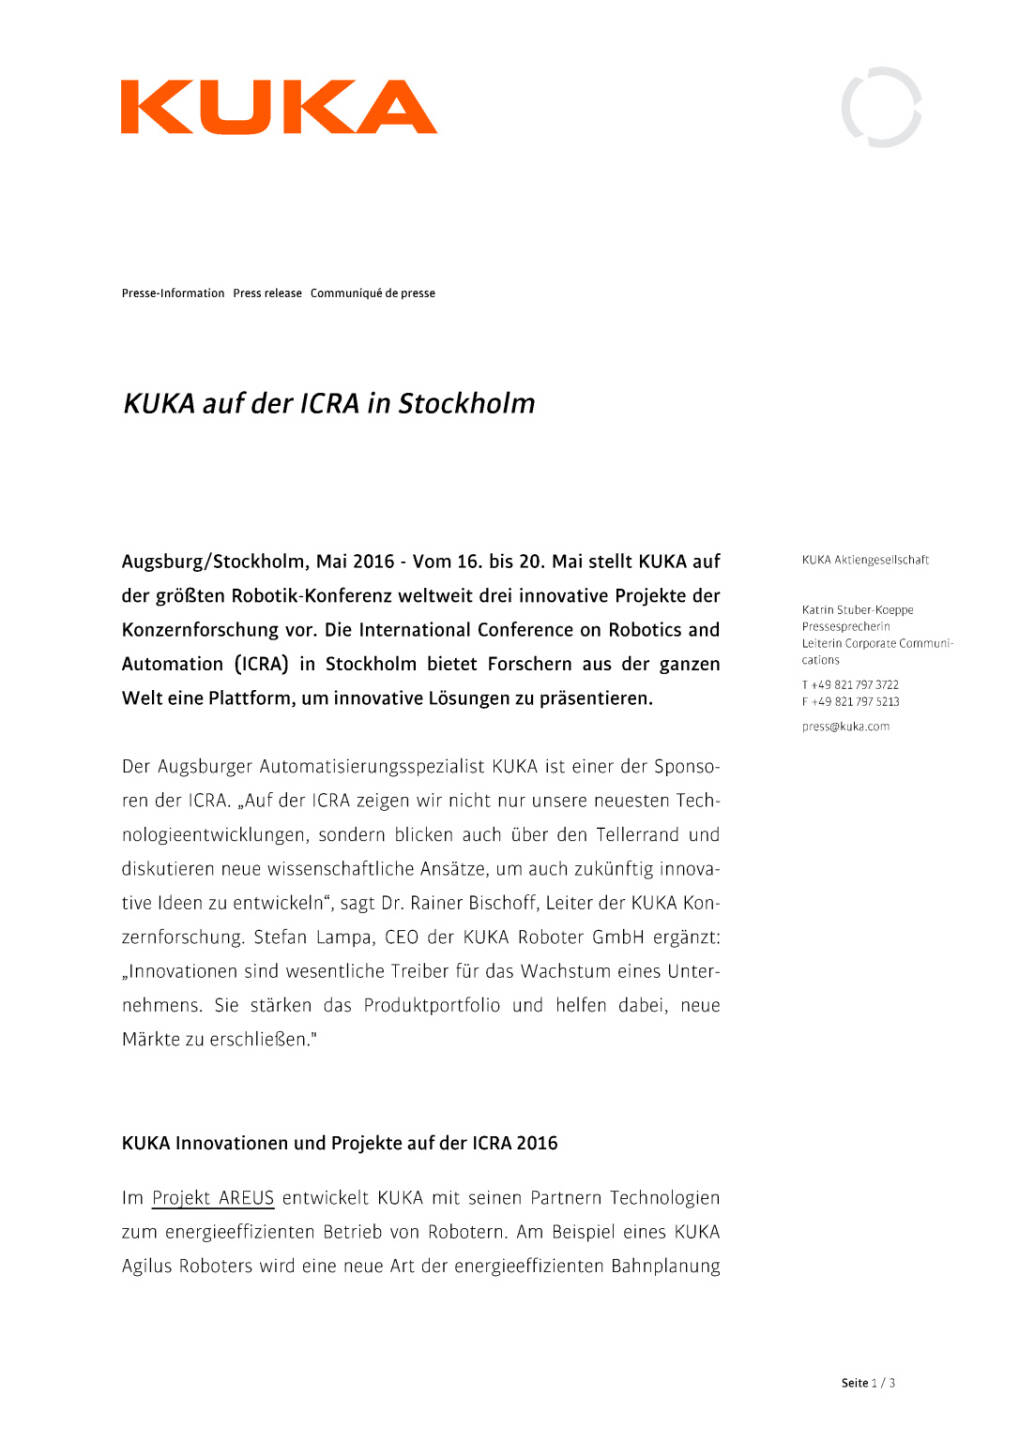 KUKA auf der ICRA in Stockholm, Seite 1/3, komplettes Dokument unter http://boerse-social.com/static/uploads/file_1040_kuka_auf_der_icra_in_stockholm.pdf